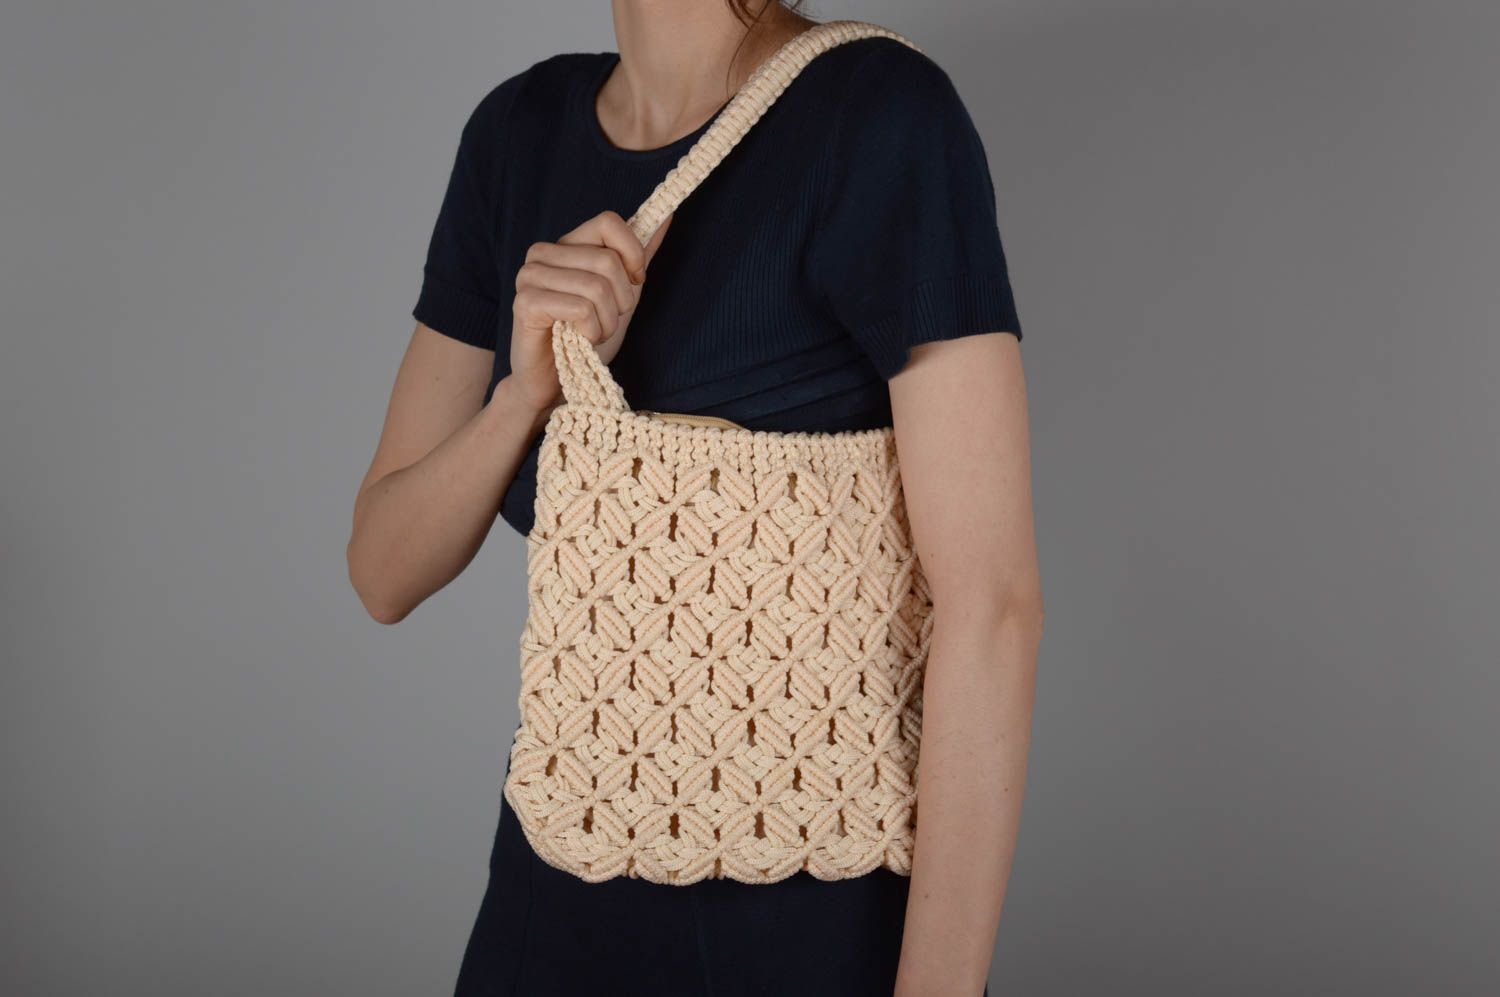 Handmade bag macrame bag hand bags women purse fashion accessories unique gifts photo 5